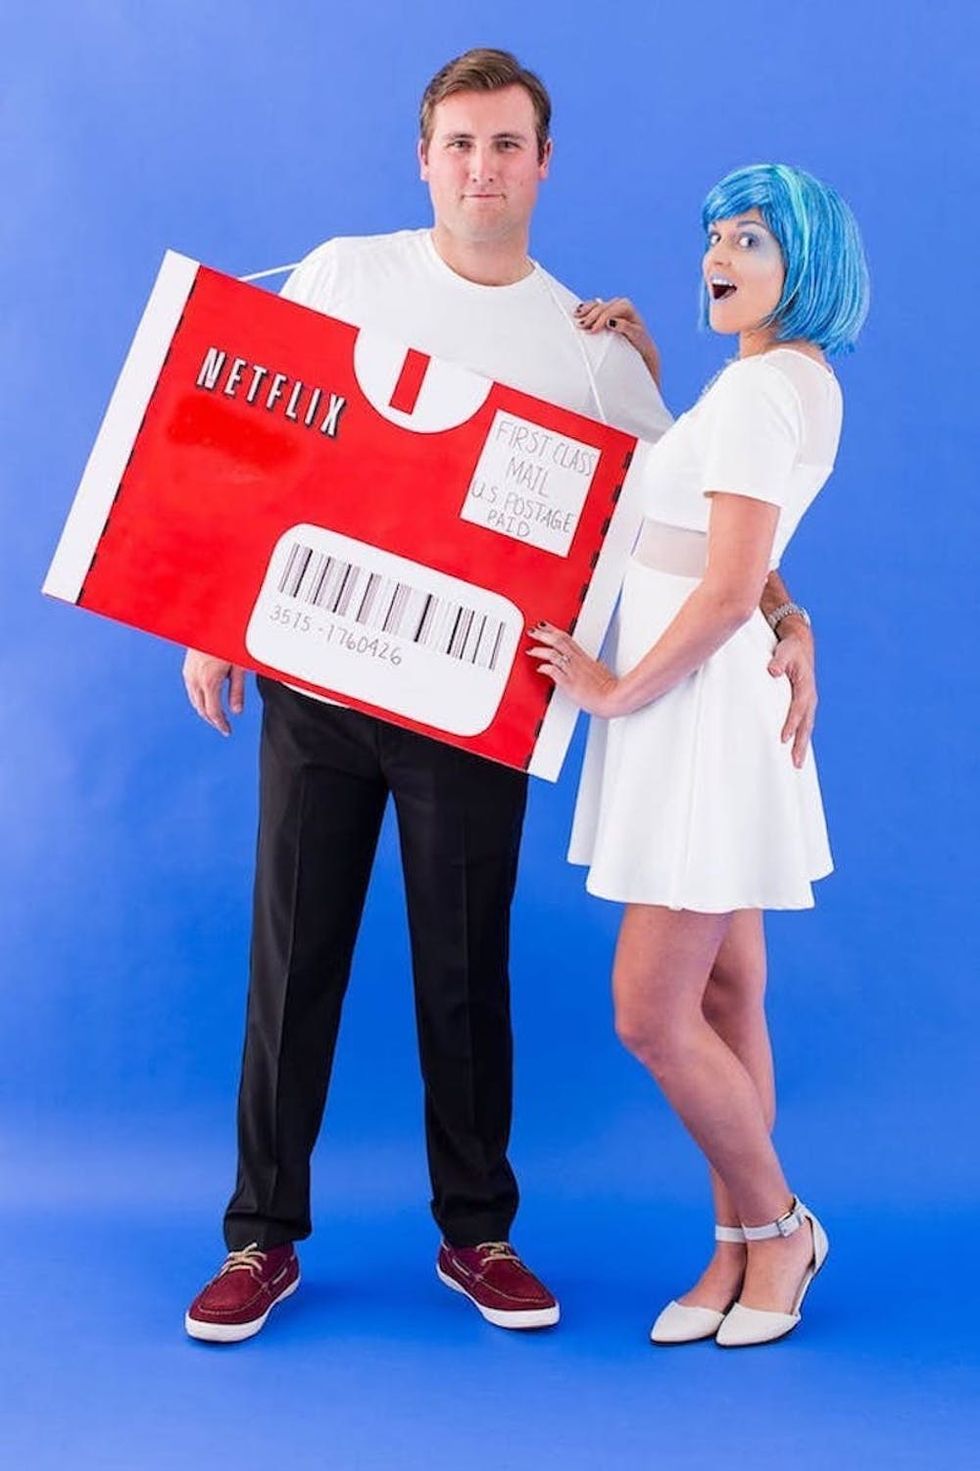 Netflix + Chill couples costume